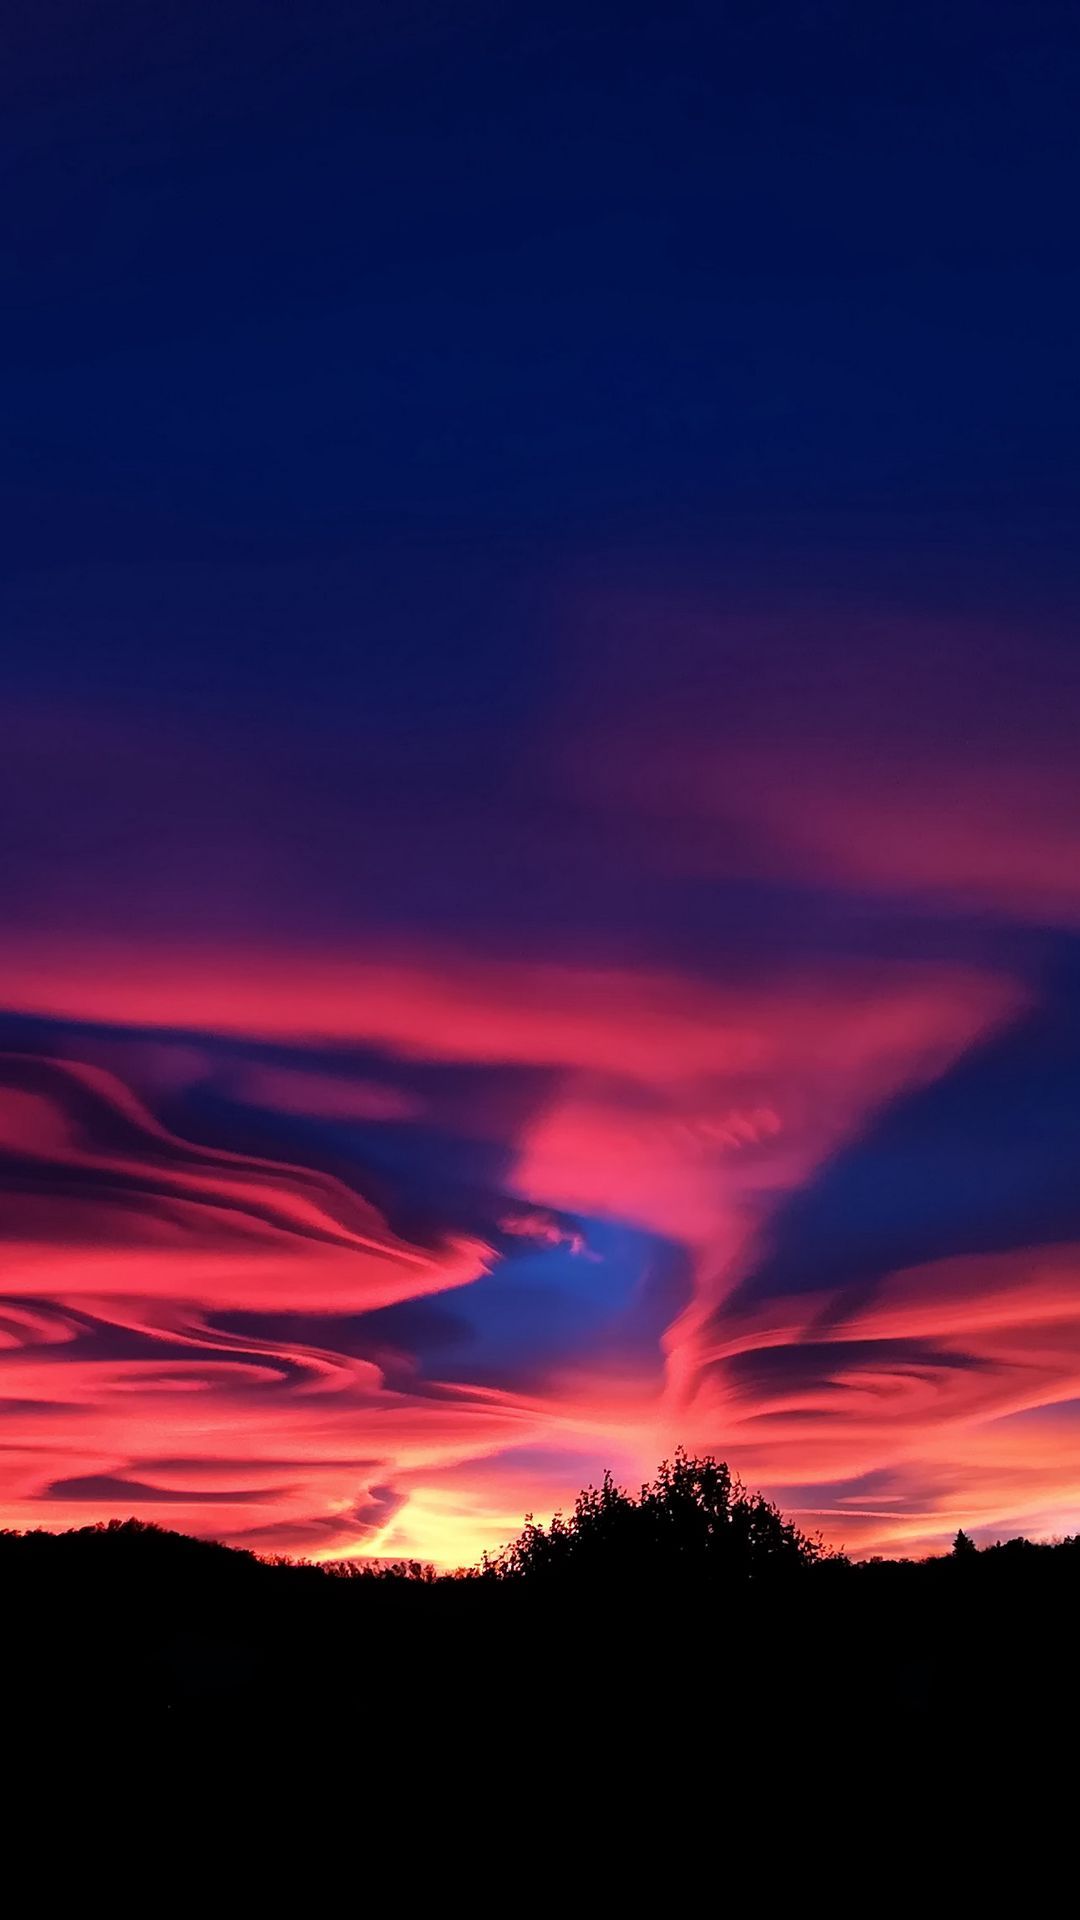 Download wallpaper 1080x1920 sky, sunset, clouds samsung galaxy s4